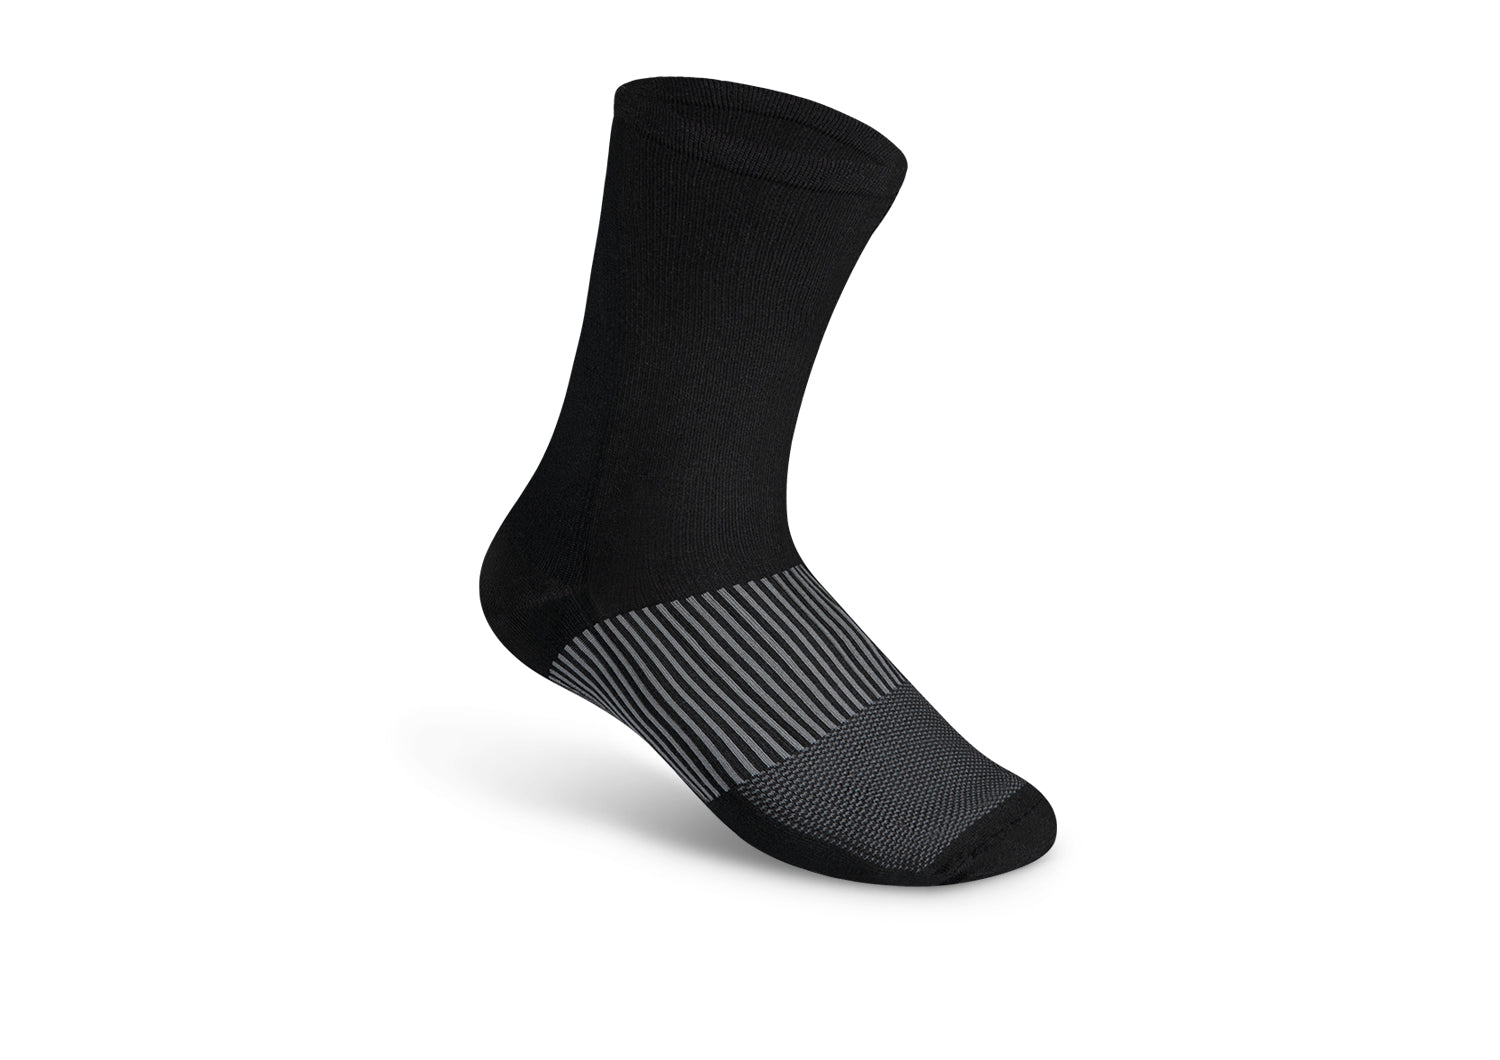 Foot Traffic Men's Size Matters Socks